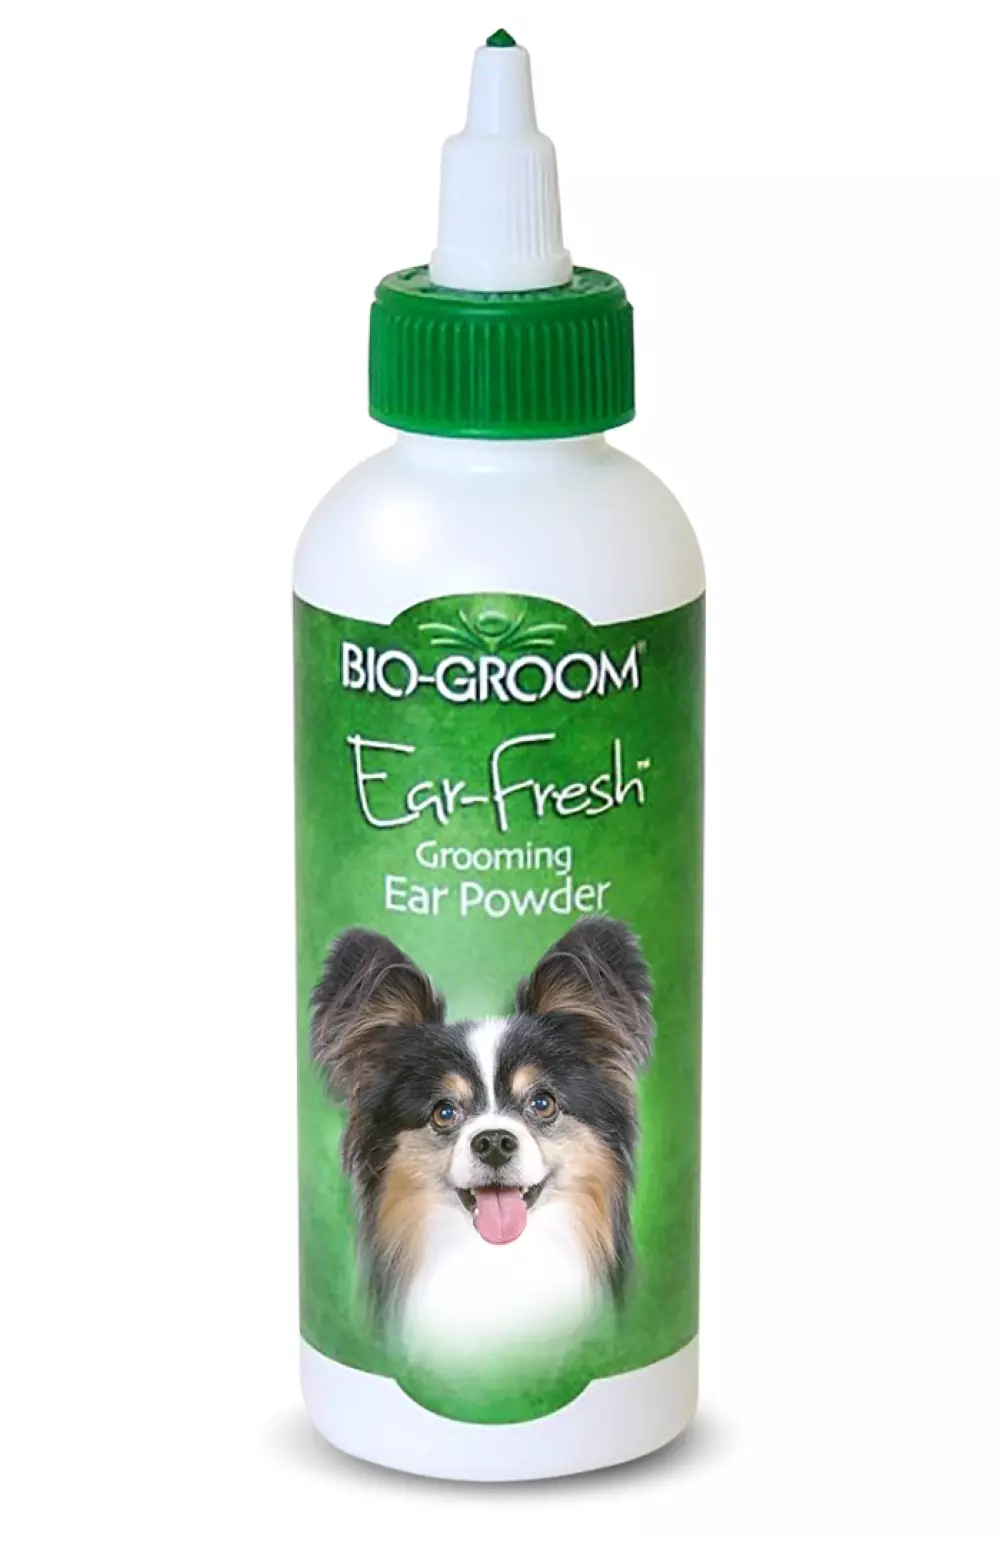 Bio Groom Ear Powder 24g, 021653516243, Hundeutstyr, Hundepleie, Bio Groom, Paghanini Engros A/S, BIO GROOM EAR FRESH 24G